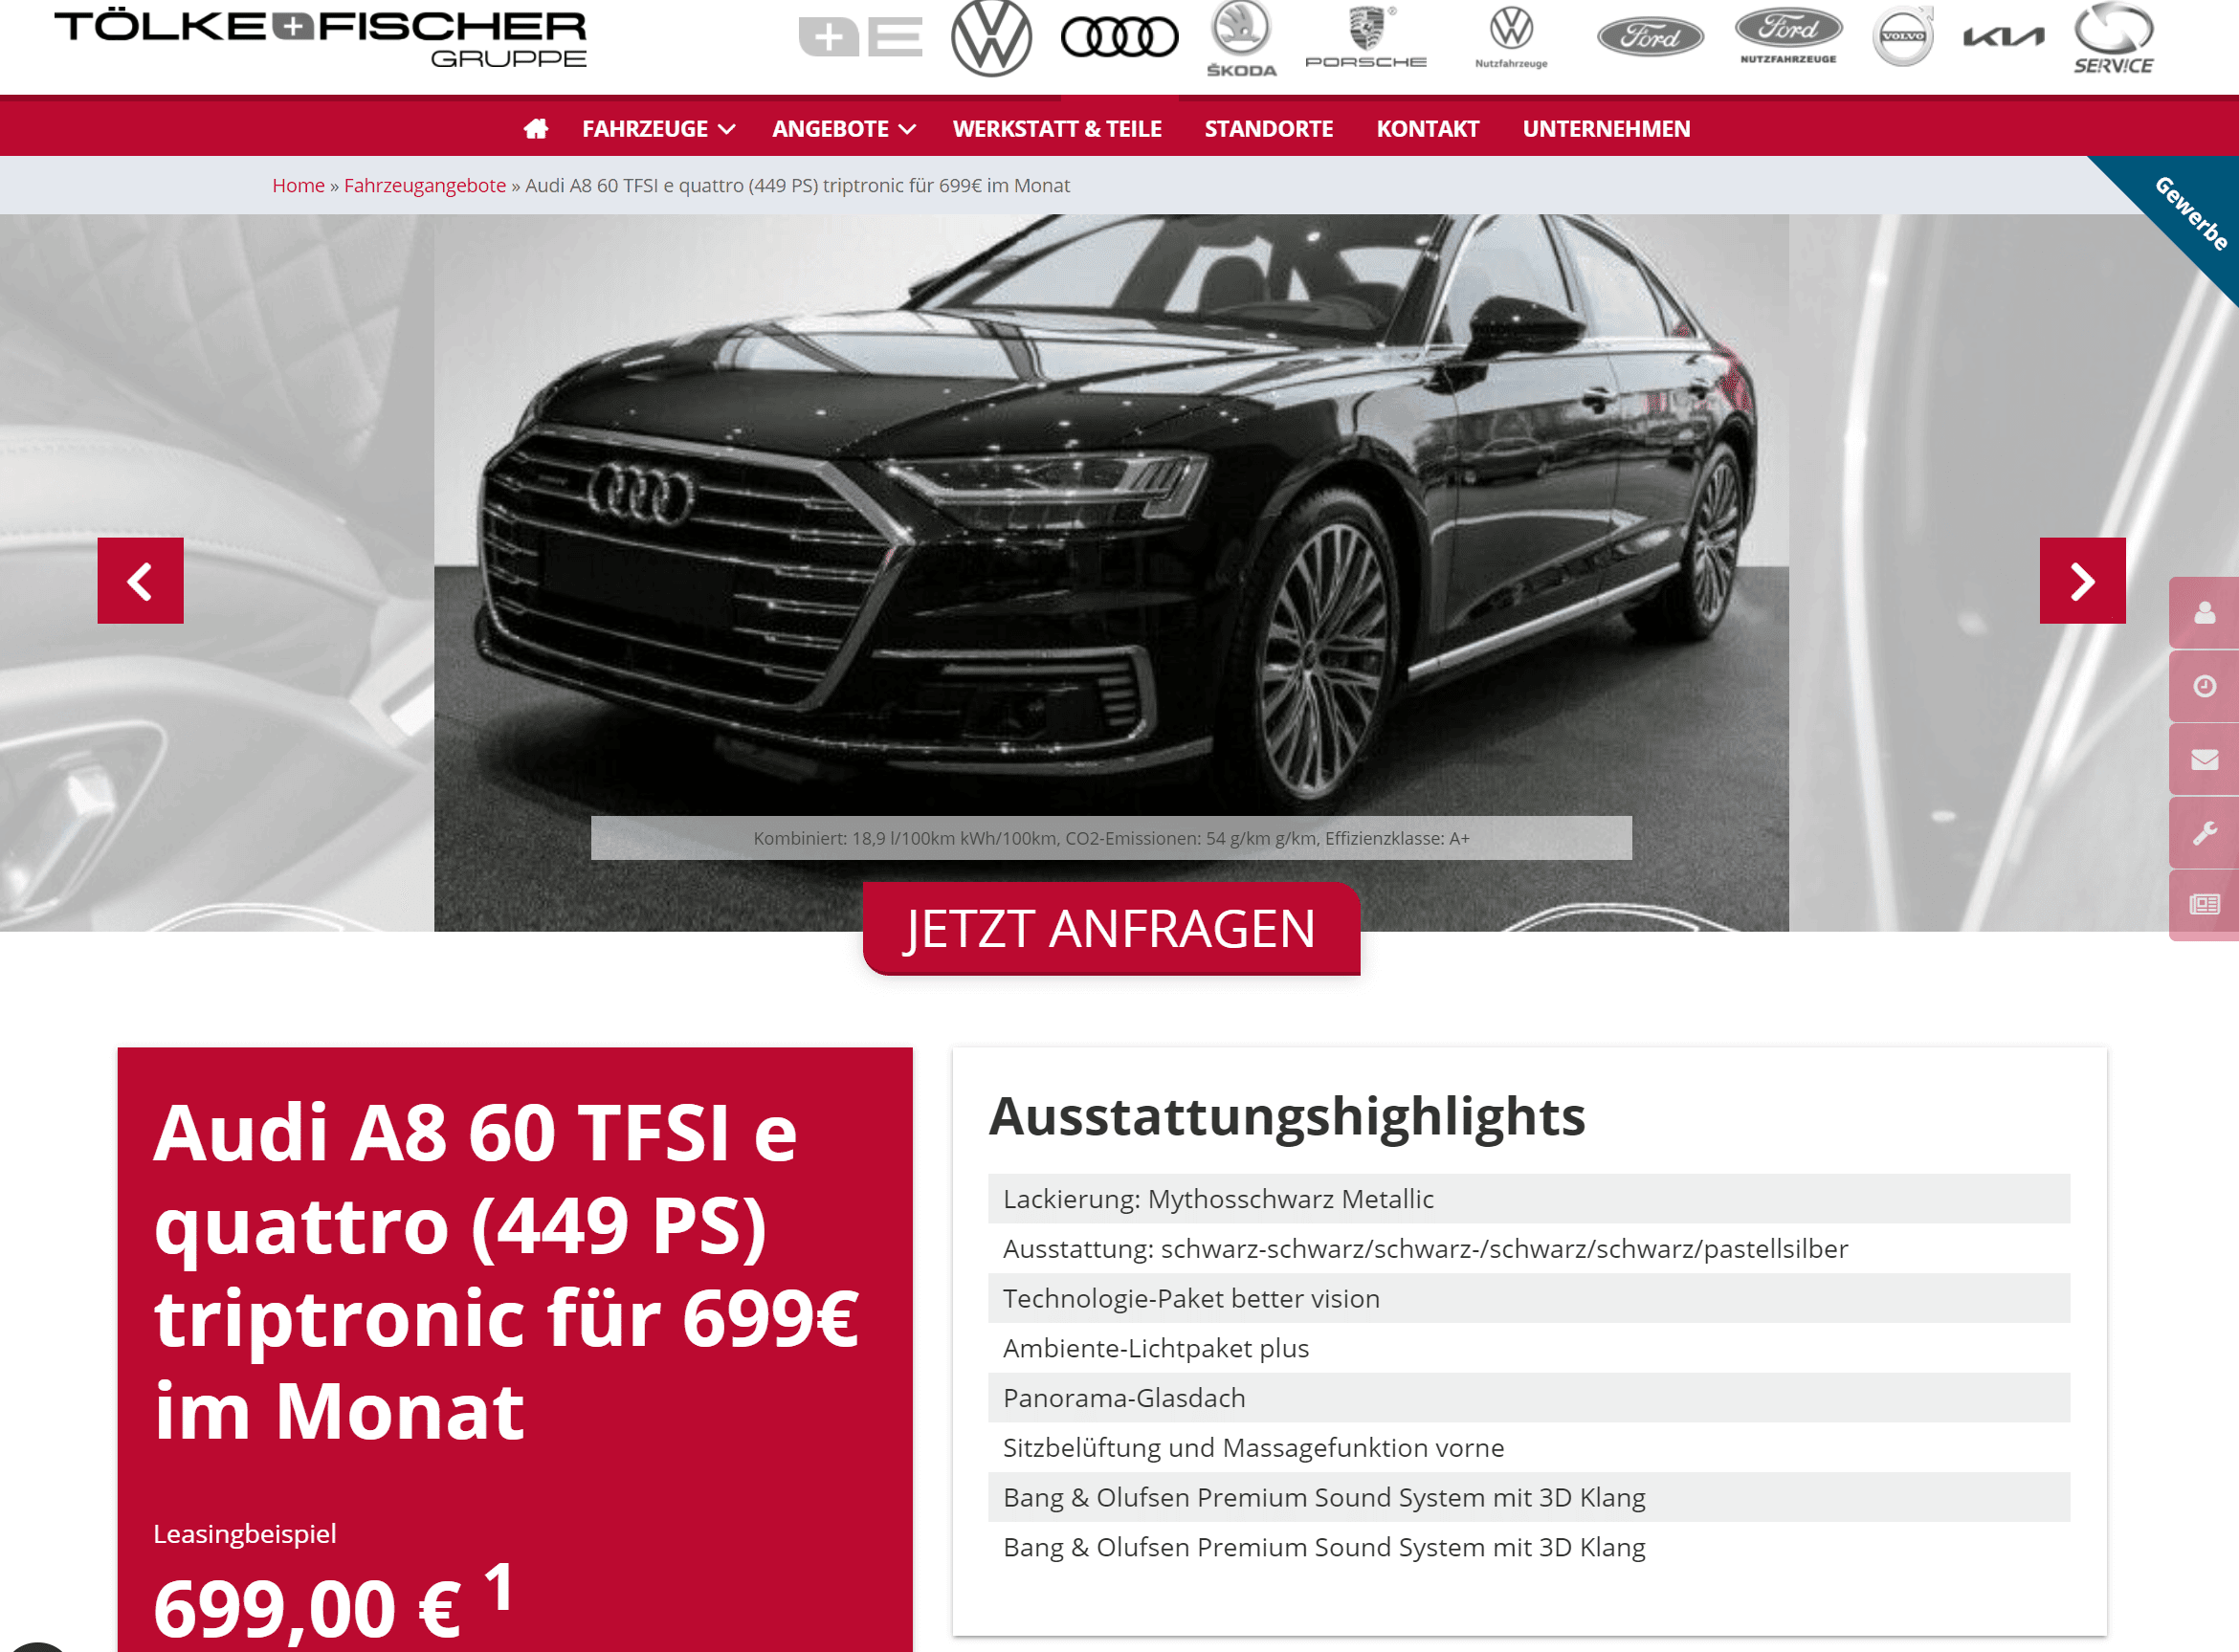 Audi A8 60 TFSI e Leasing für 699€ im Monat netto 